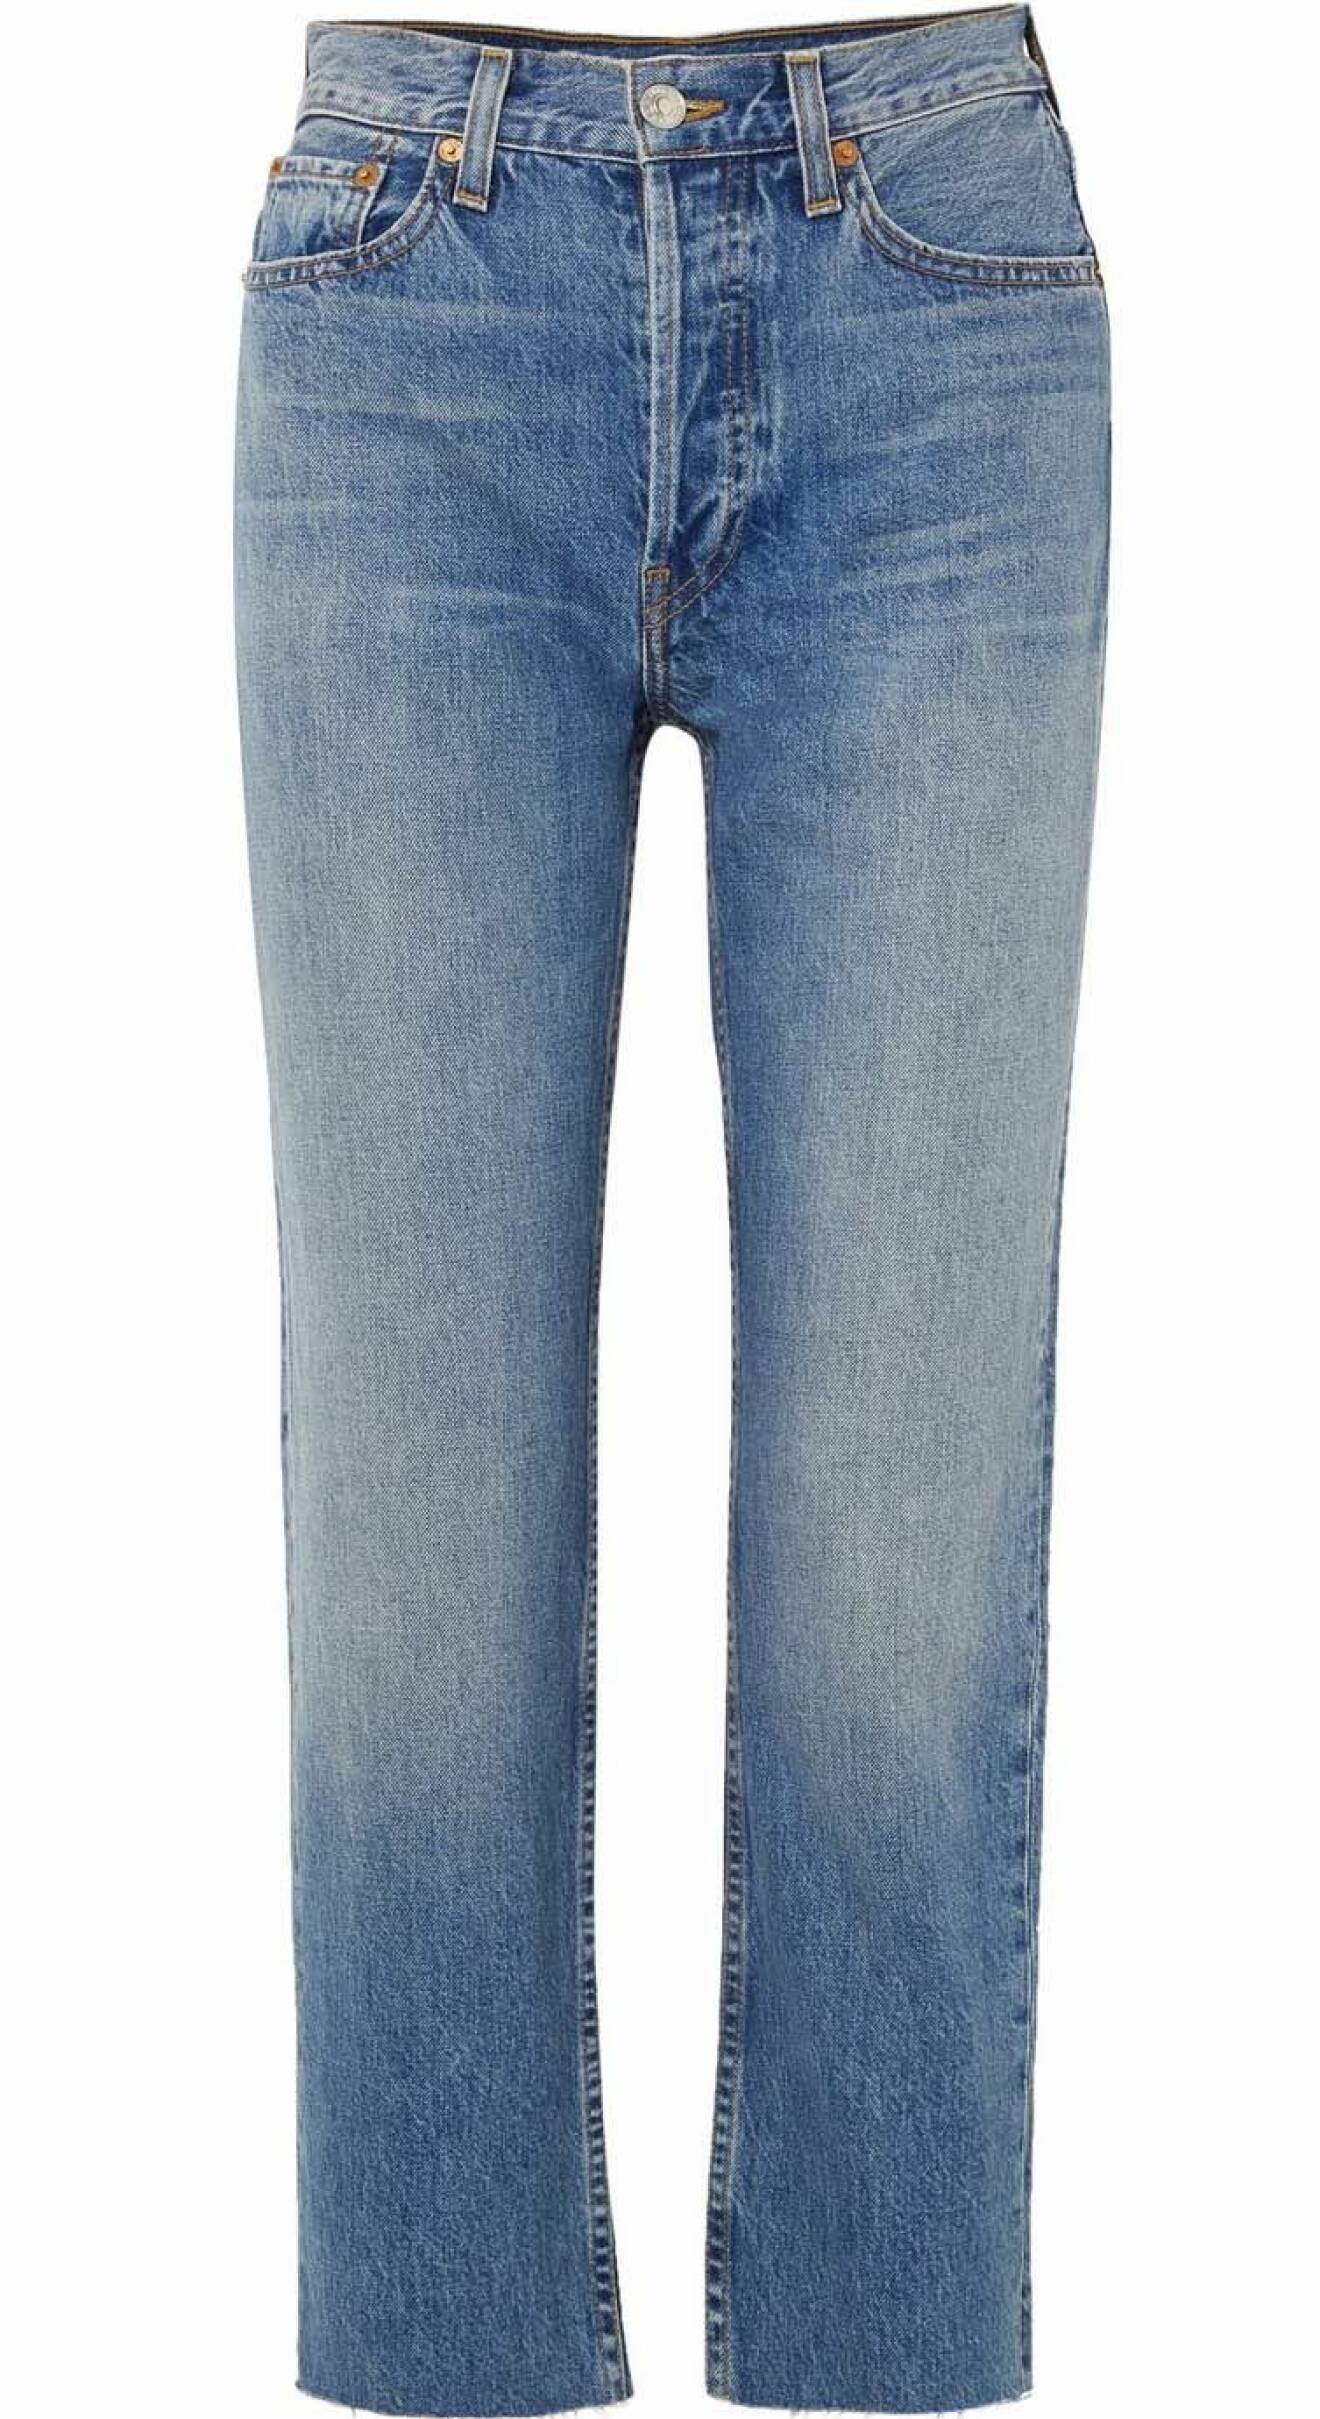 ljusa-re-done-denim-jeans-net-a-porter